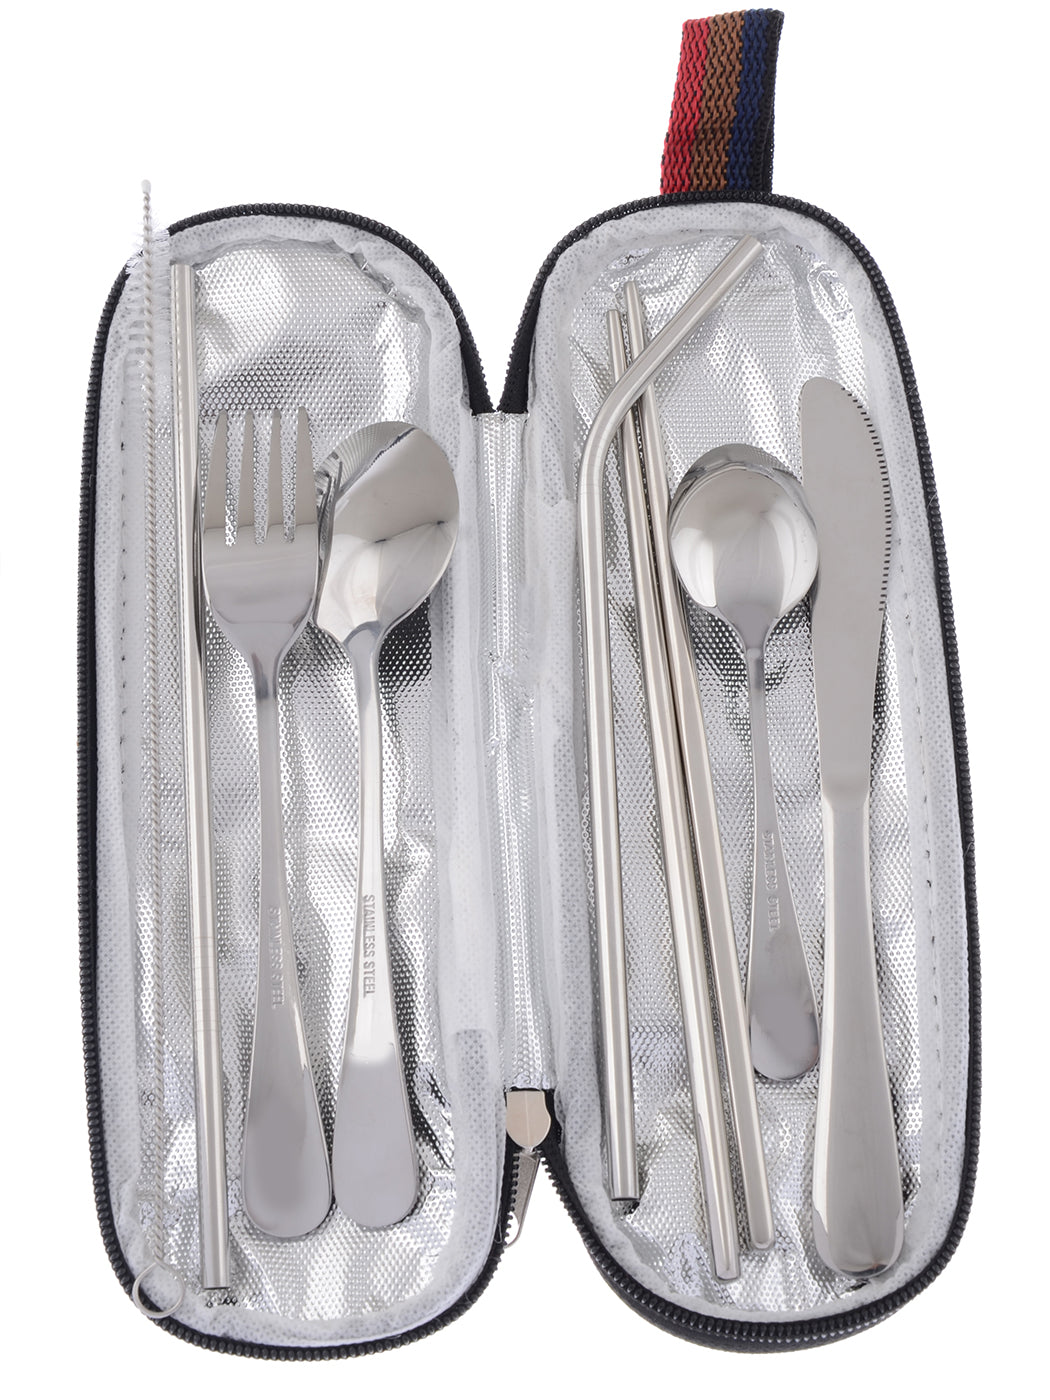 Portable Case Stainless Steel Flatware Set Knife Fork Spoon Reusable Dishwasher